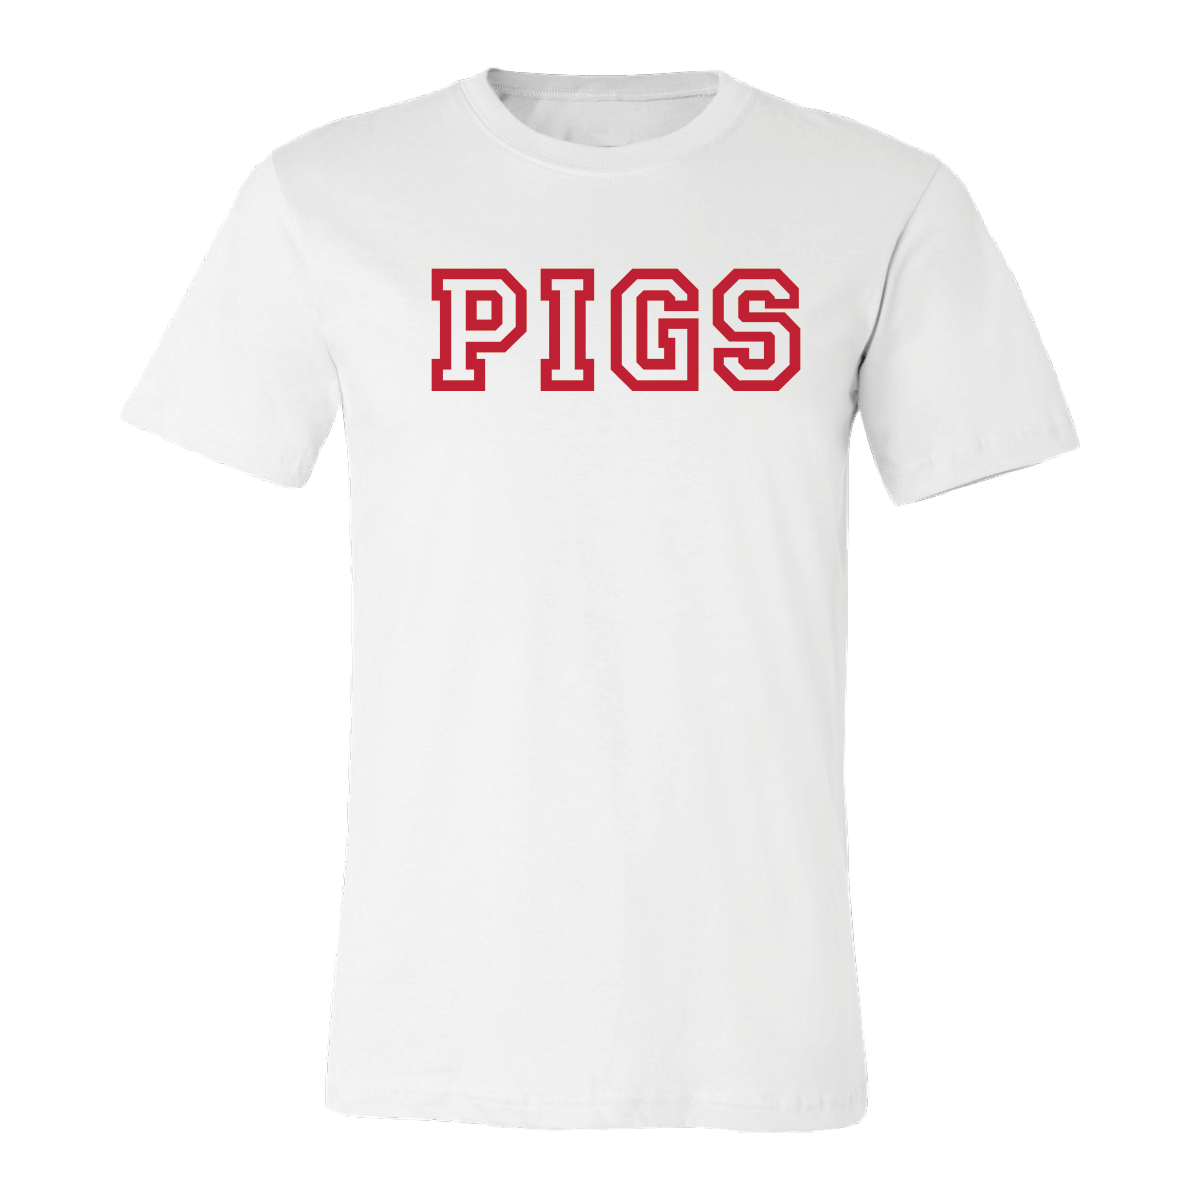 PIGS T-shirt - White